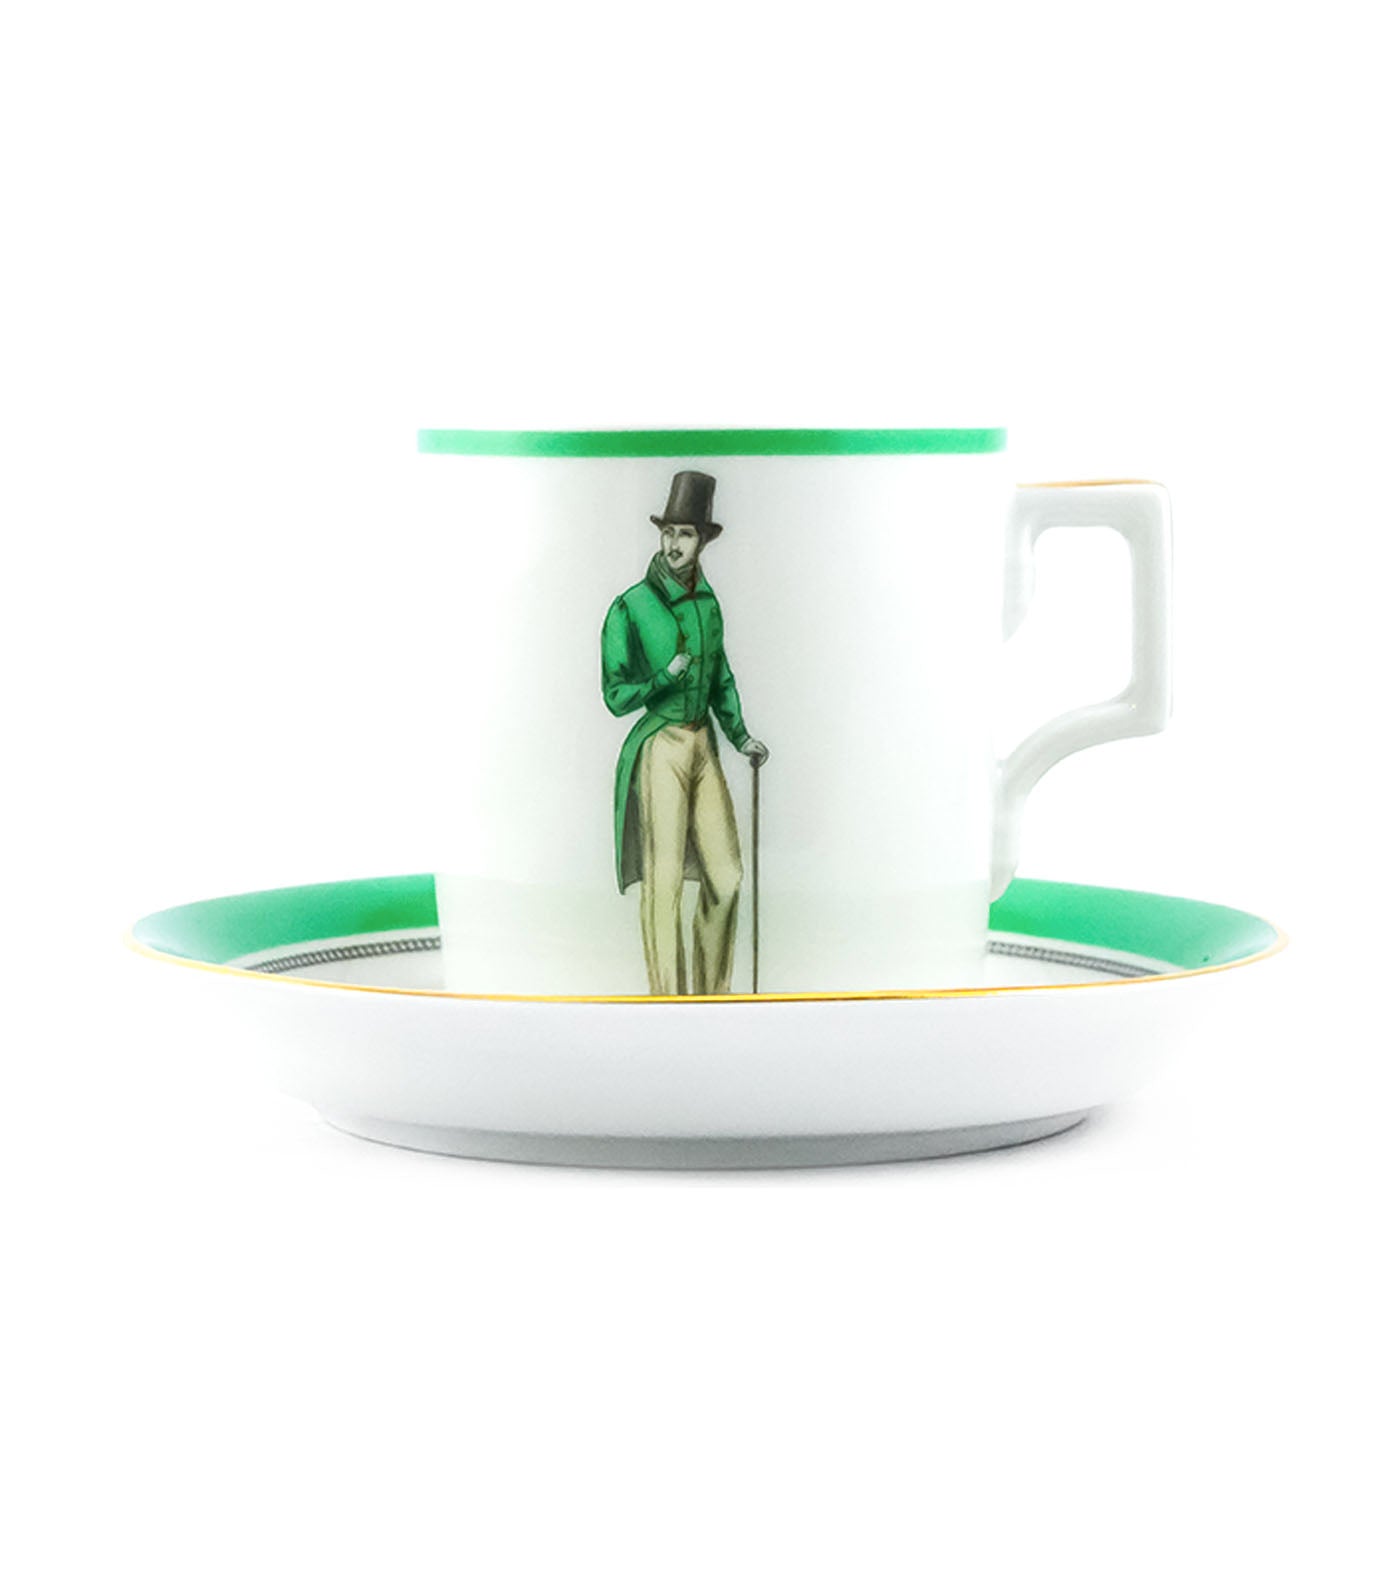 imperial porcelain modes de paris 1832 teacup and saucer heraldic